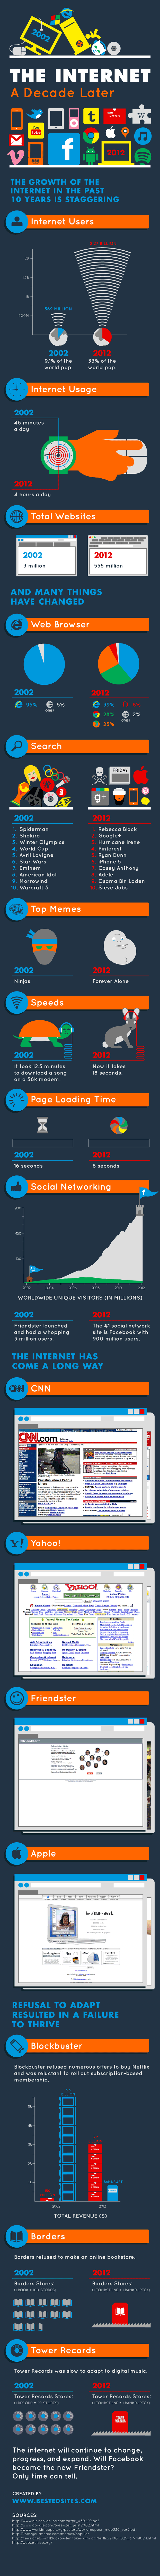 info internet 10 ans